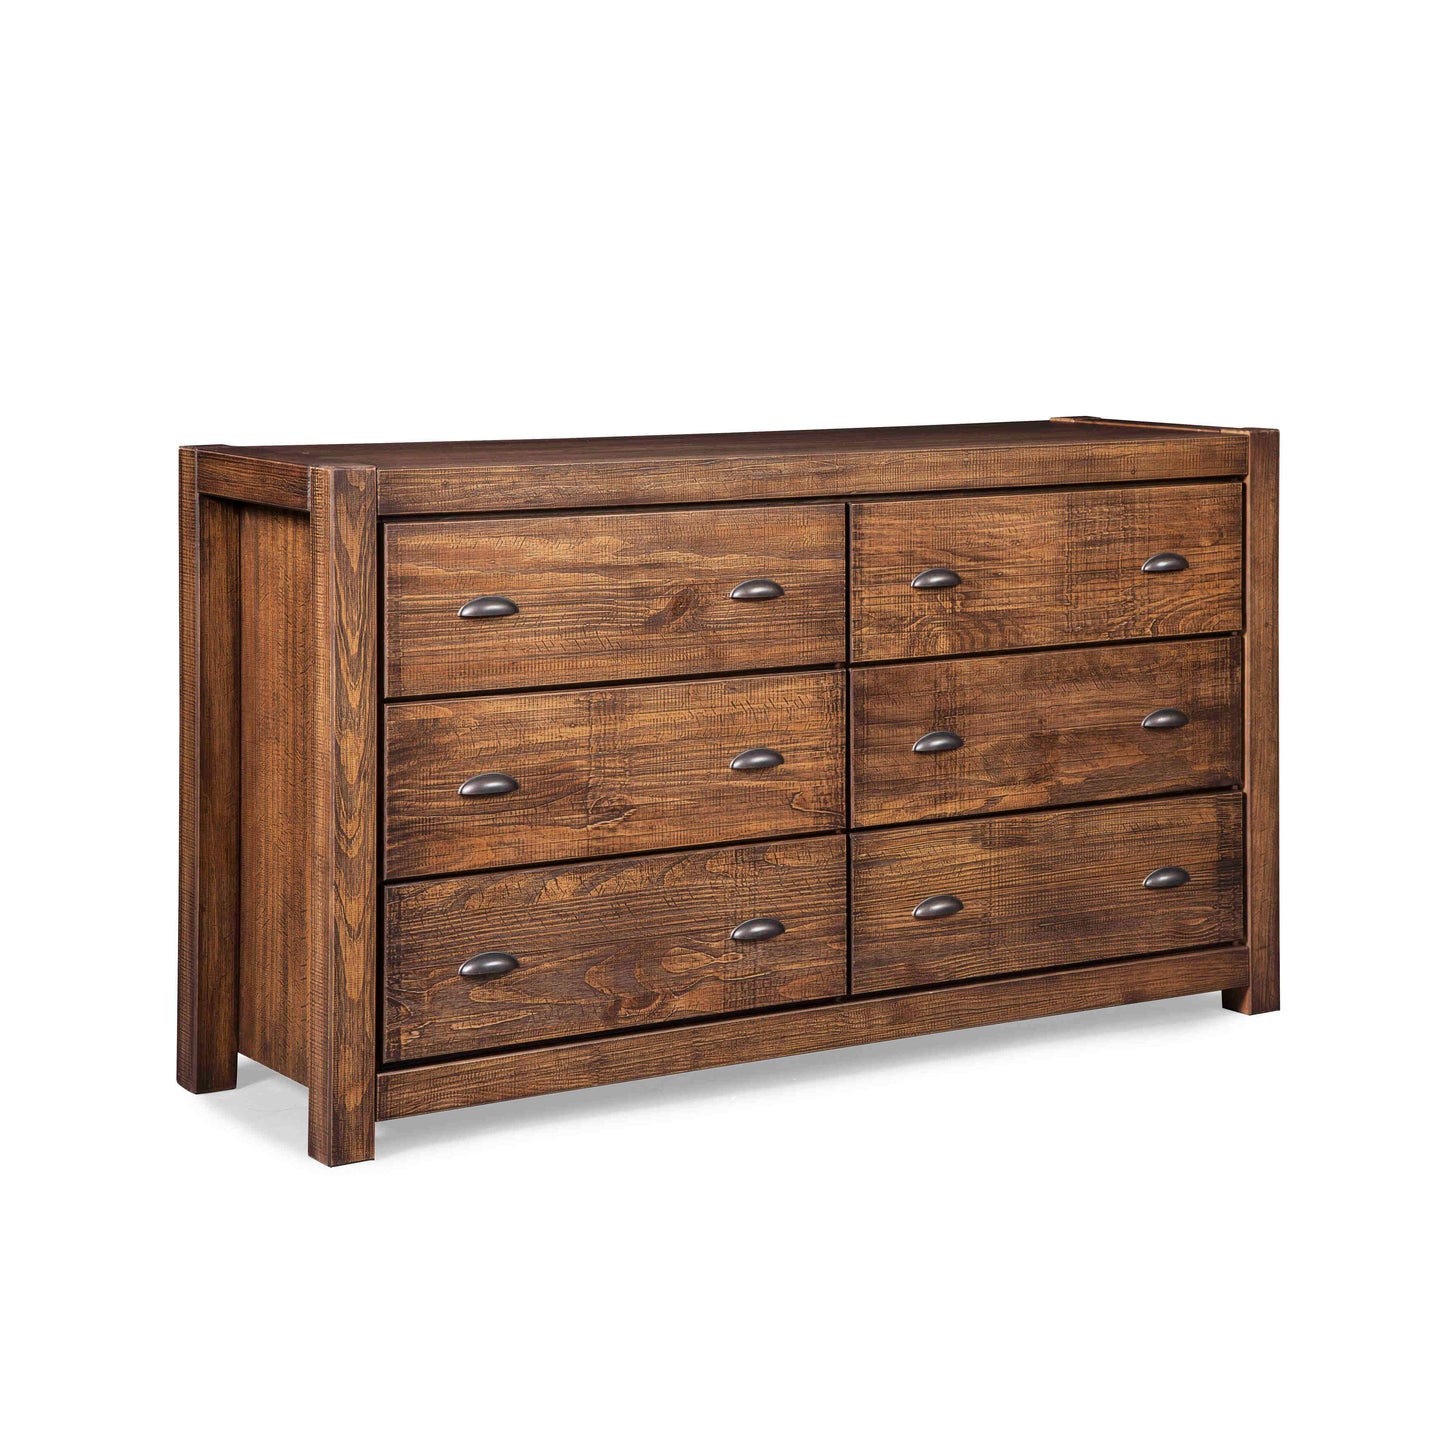 Montauk 6-Drawer Dresser